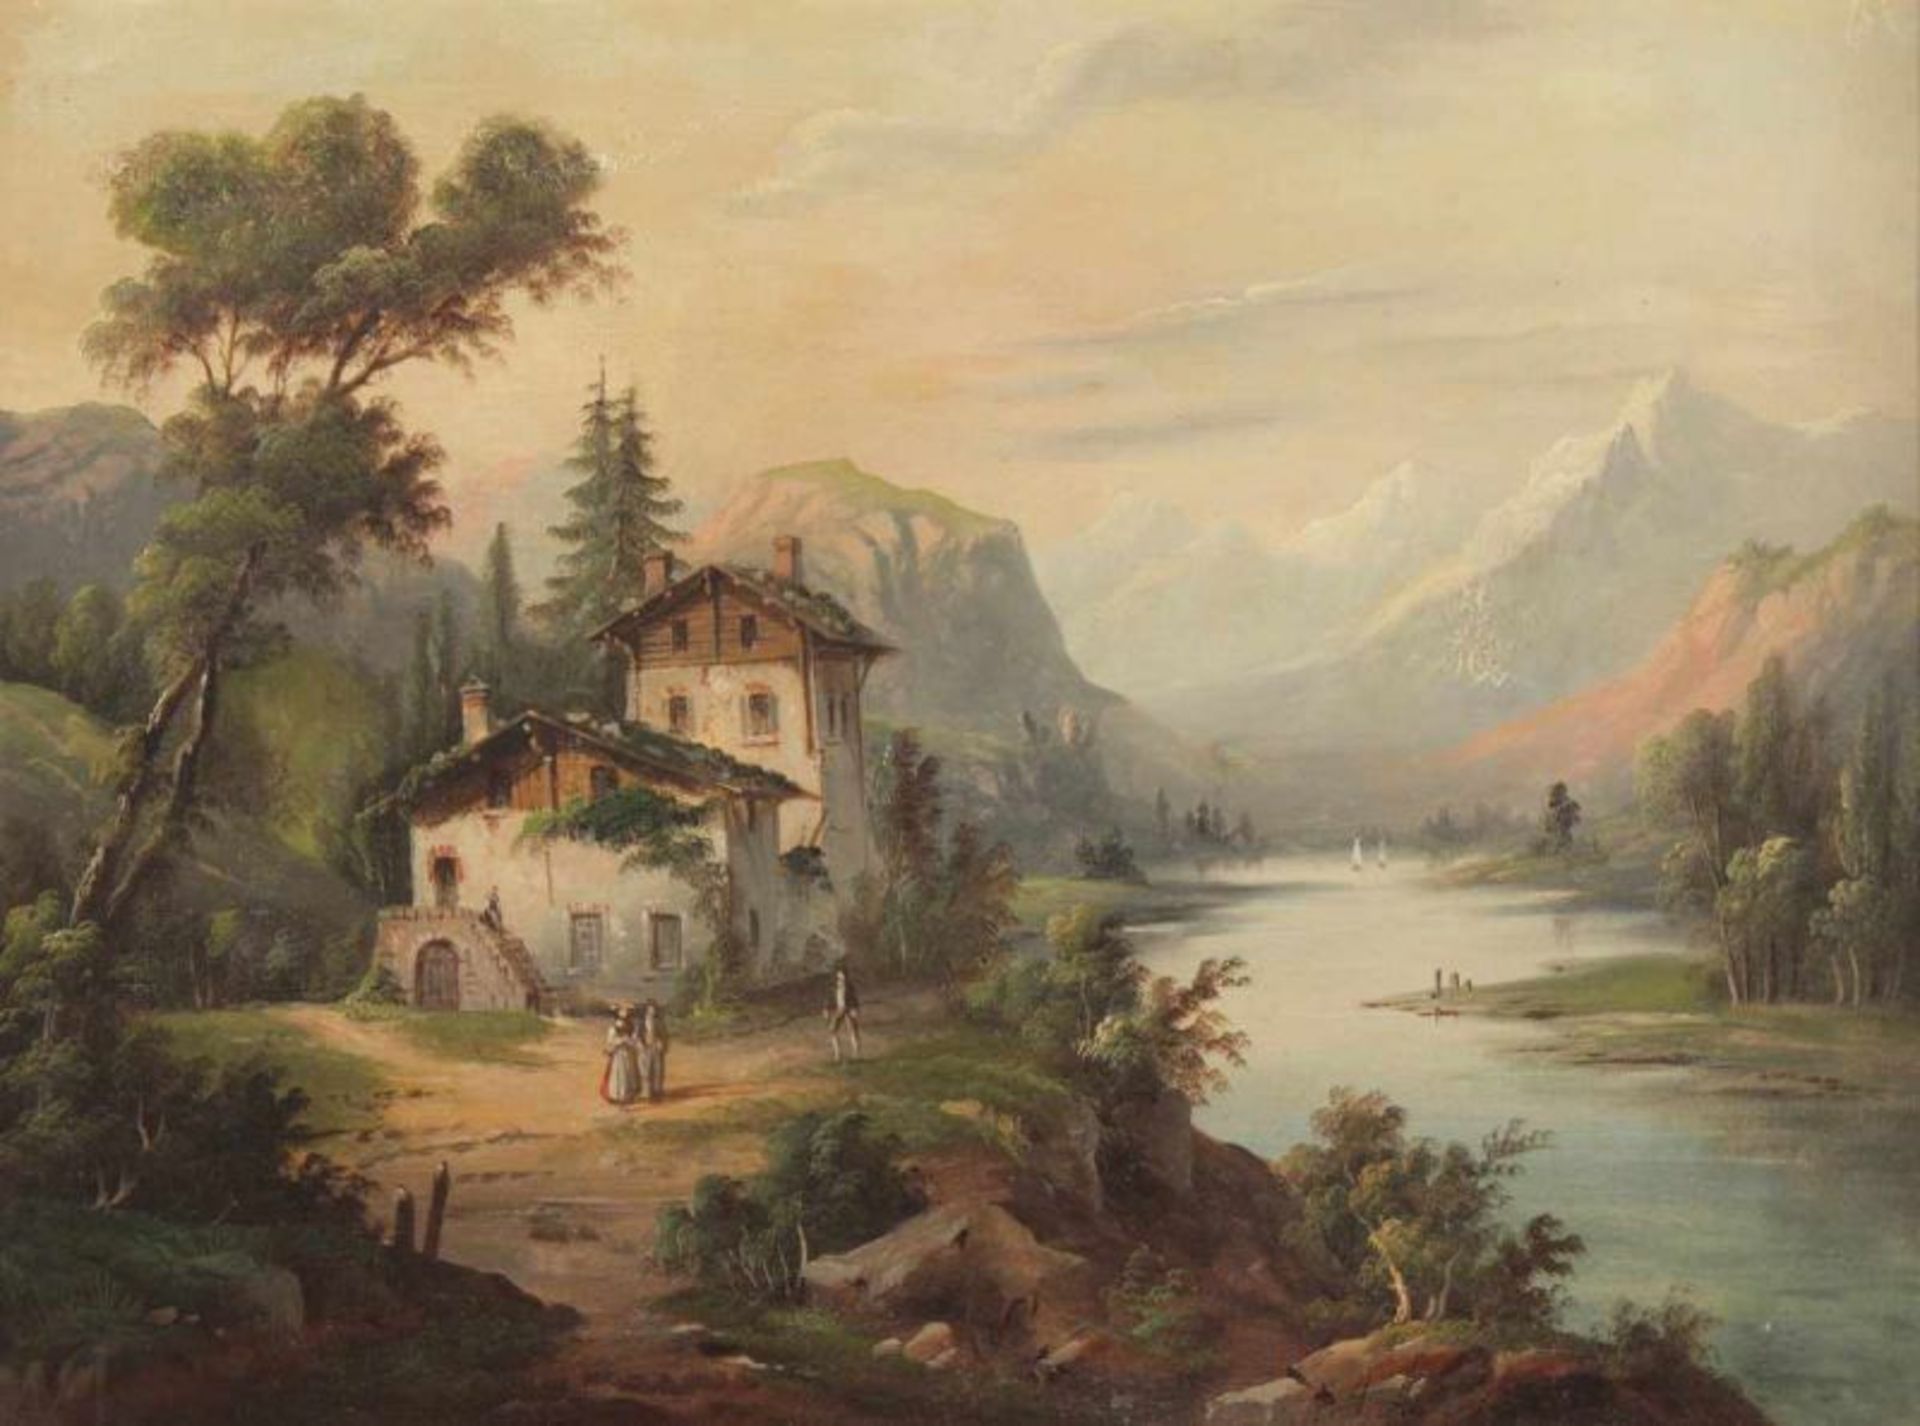 LEVY, A. (Maler E.19.Jh.), "Seenlandschaft im Vorgebirge", Öl/Lwd., 49 x 65, besch. und rest., R.